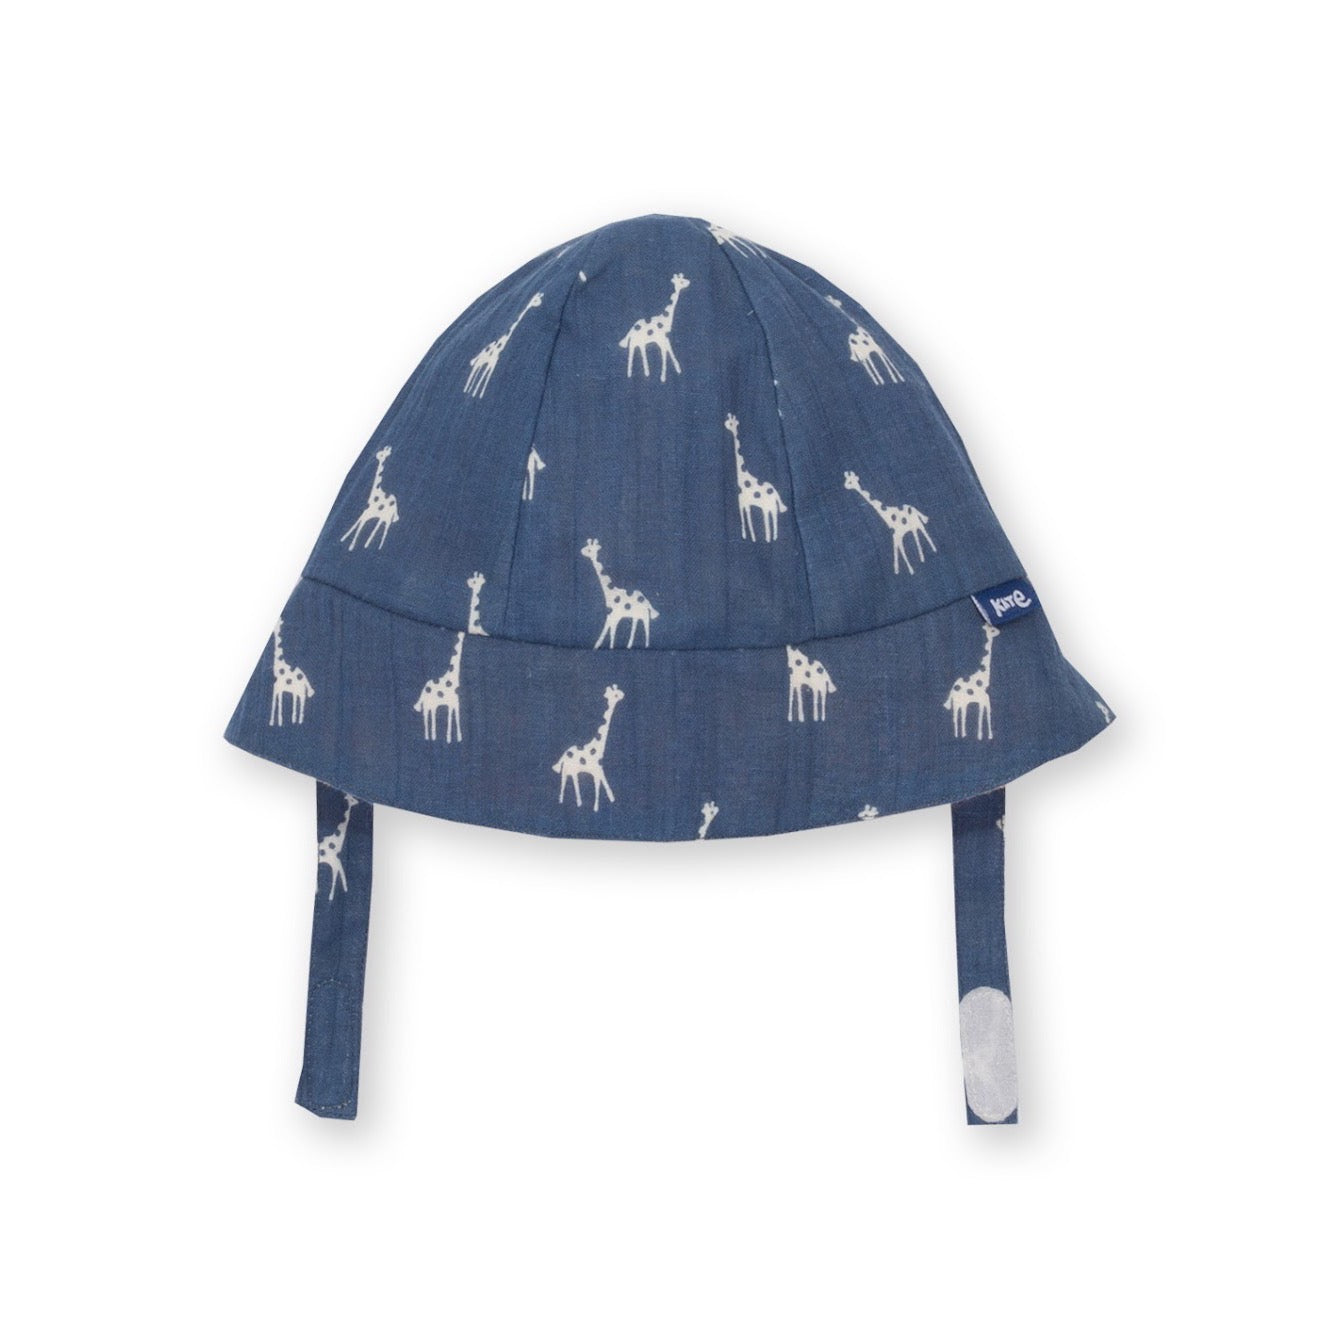 Kite Giraffy Infant Sun Hat 3570 Clothing 0-6M / Blue,6-12M / Blue,12-24M / Blue